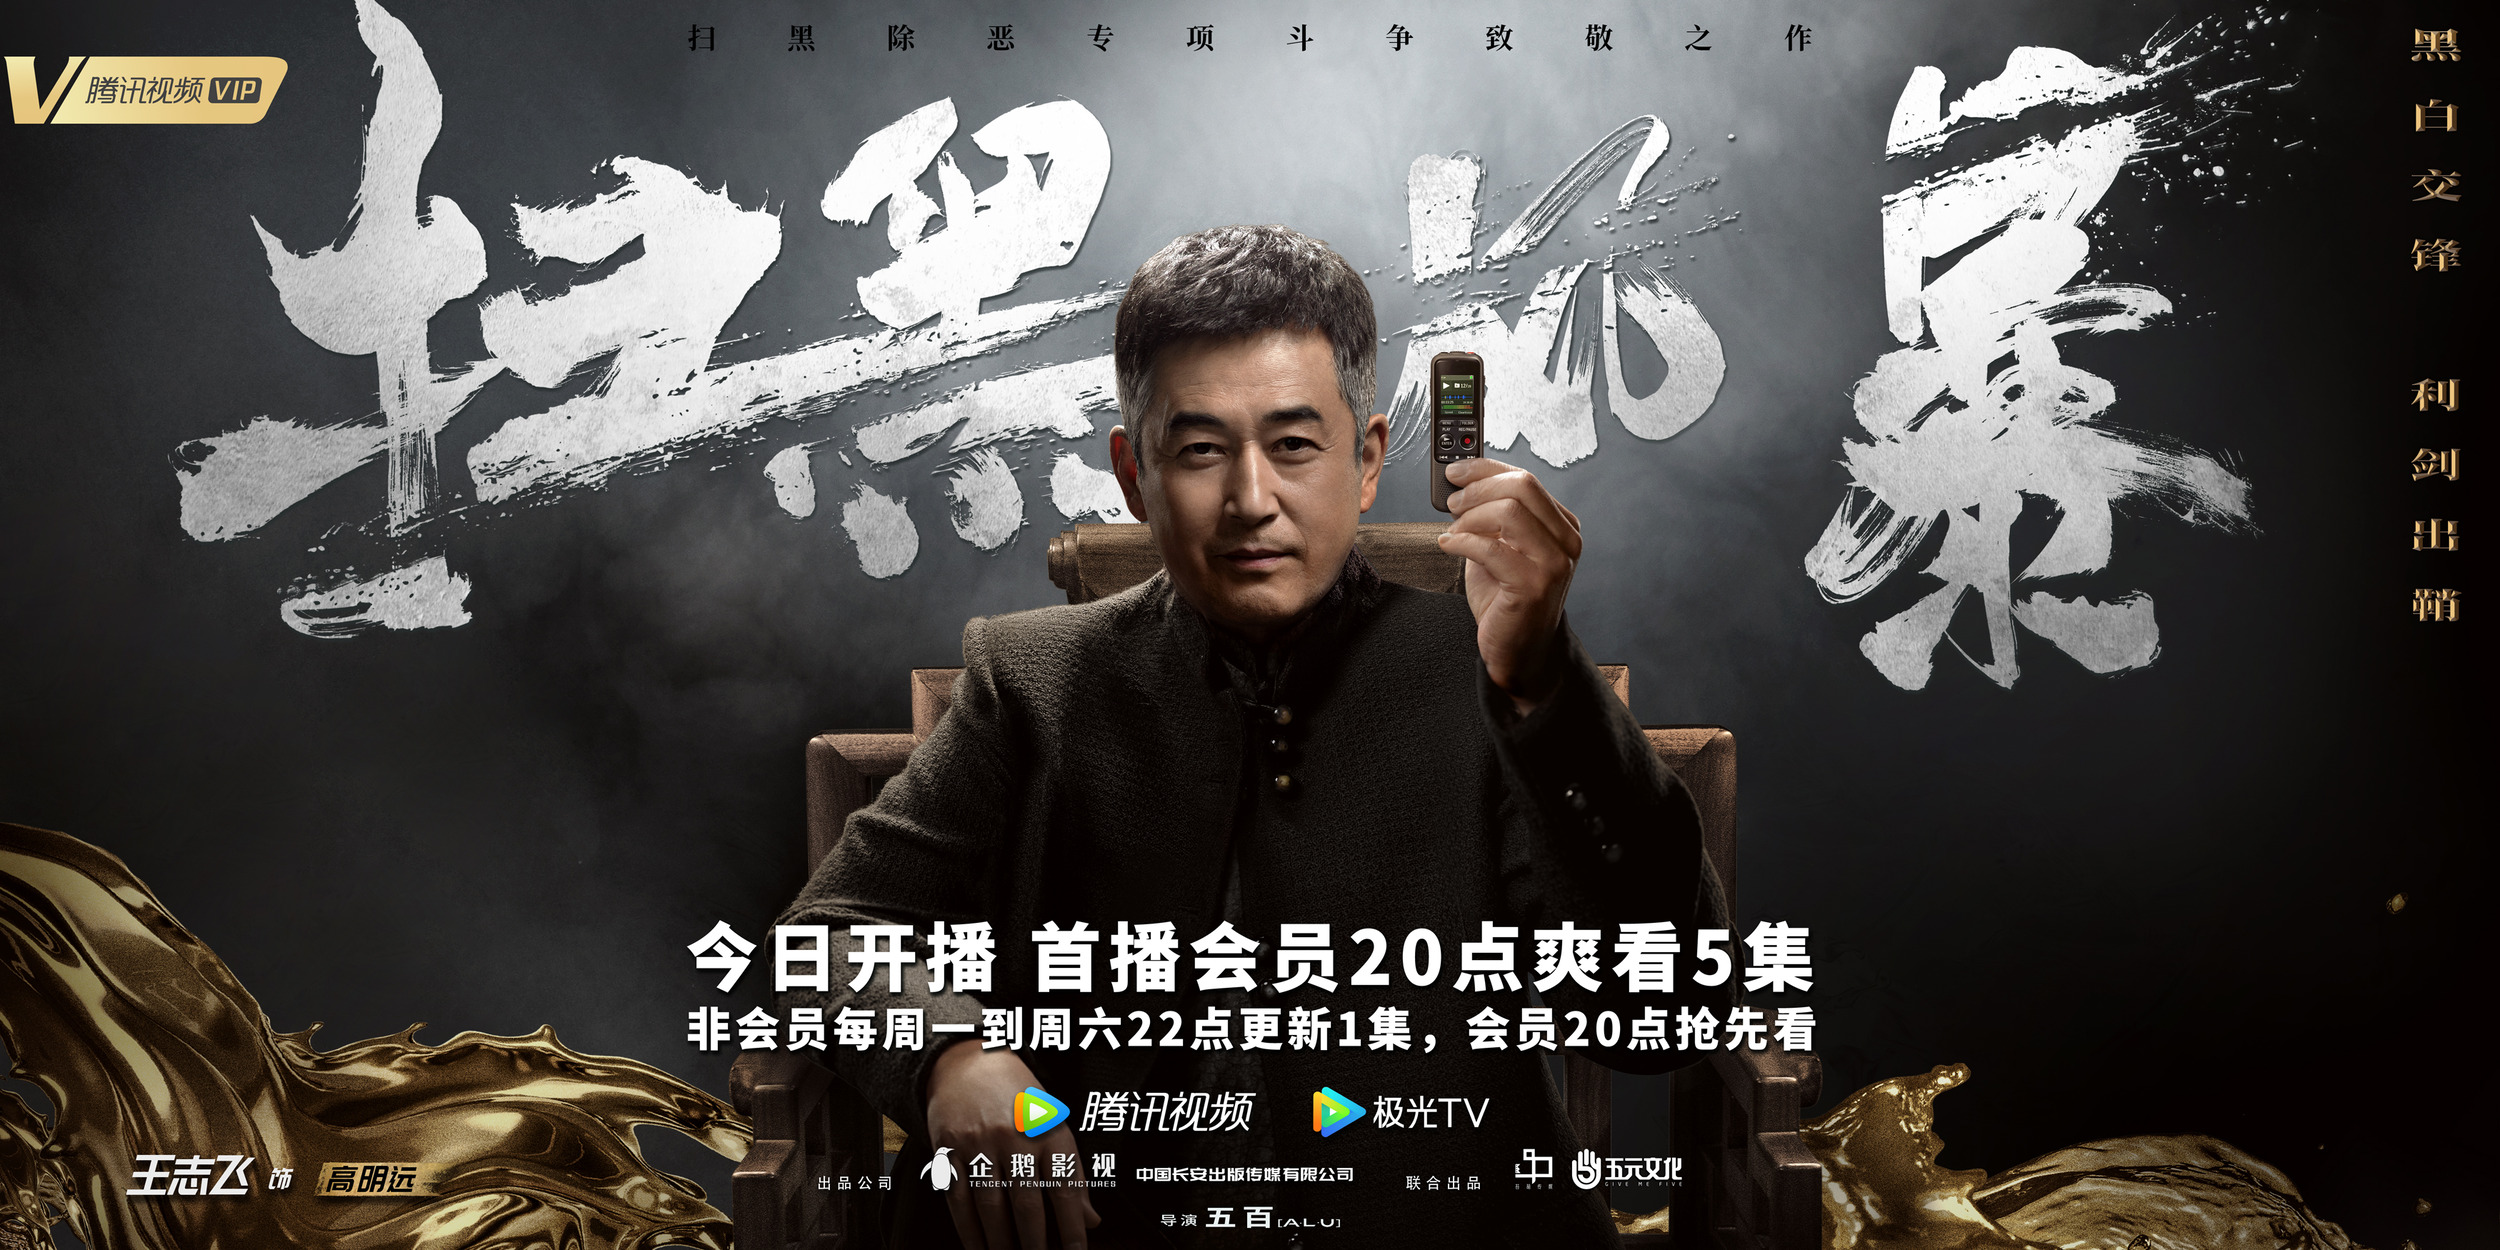 Mega Sized TV Poster Image for Sao hei feng bao (#9 of 9)